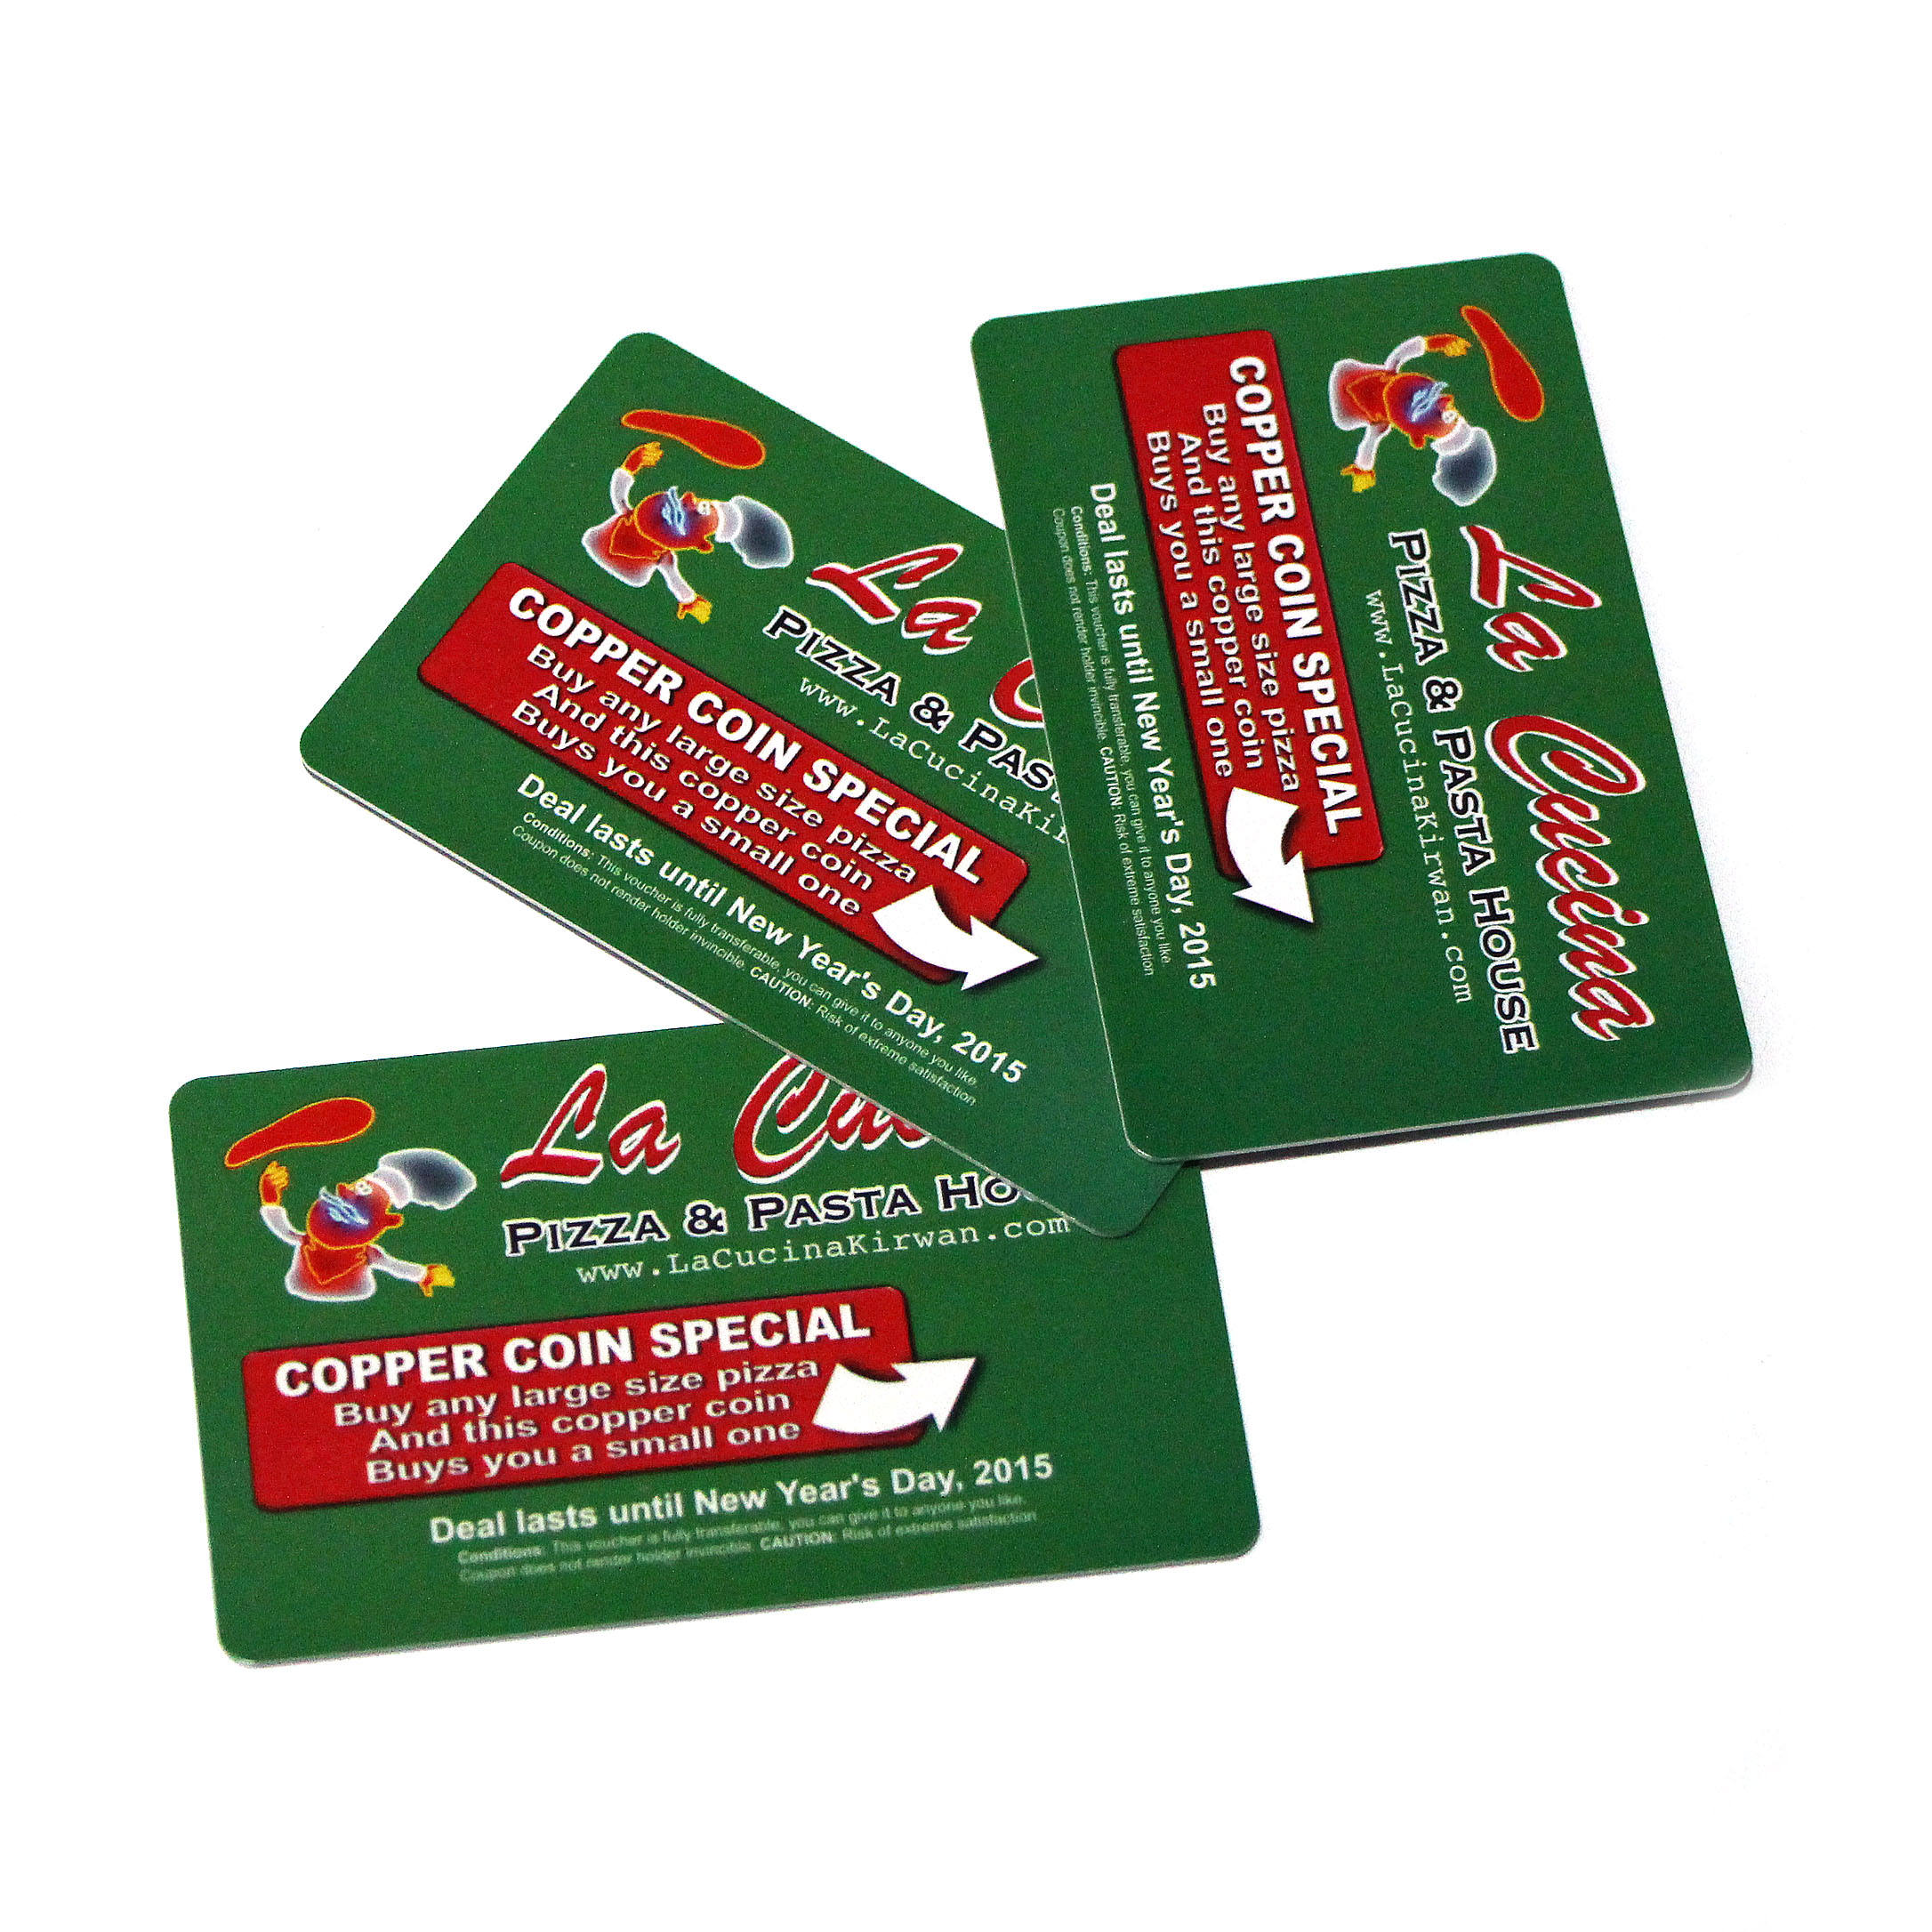 Custom Logo Printed Security Anti Fake PVC ID Card with Hologram